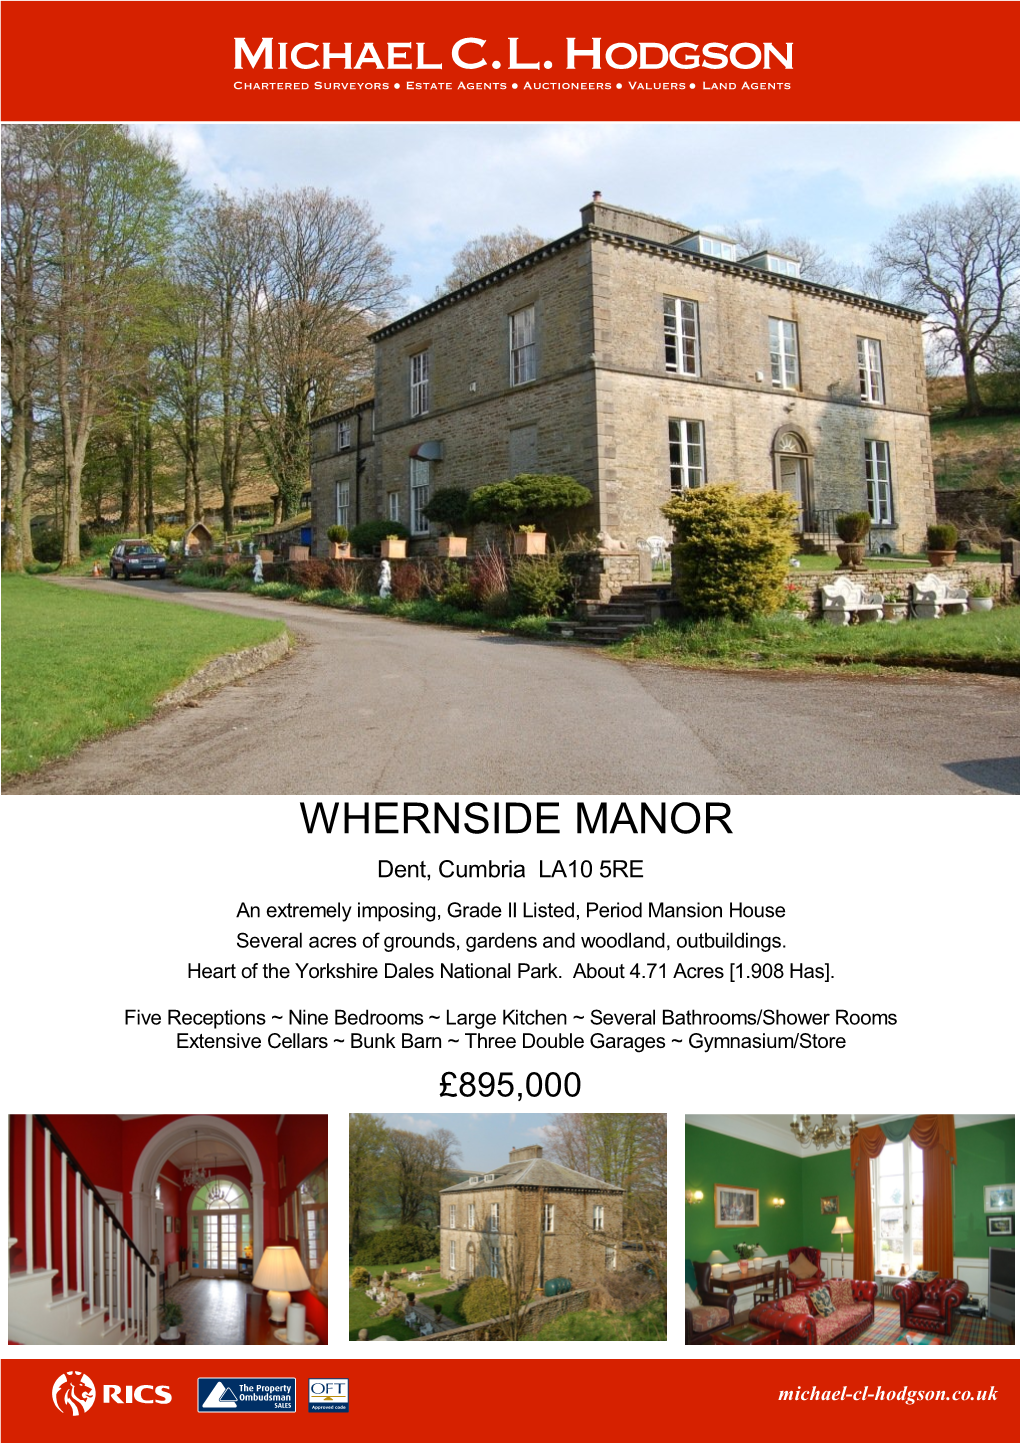 Whernside Manor